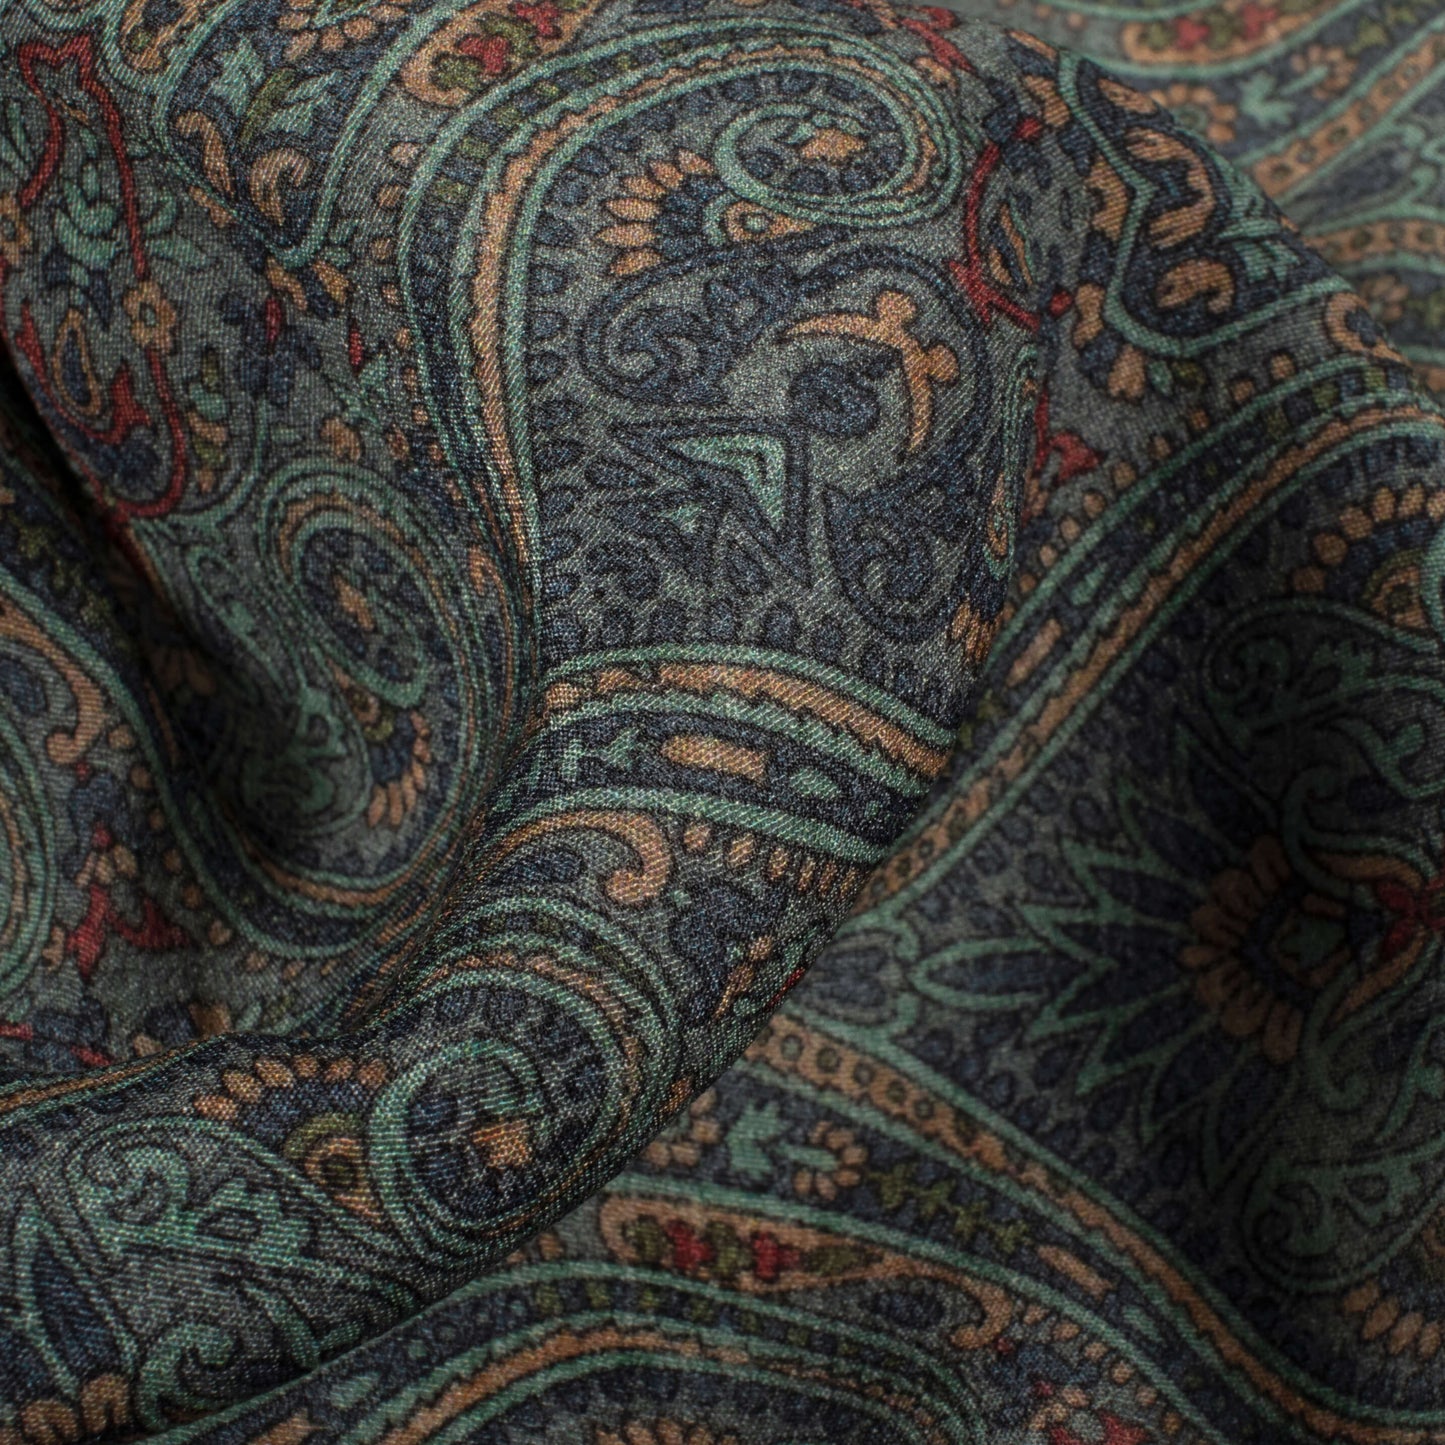 Teal Green And Blue Ethnic Digital Print Viscose Natural Crepe Fabric